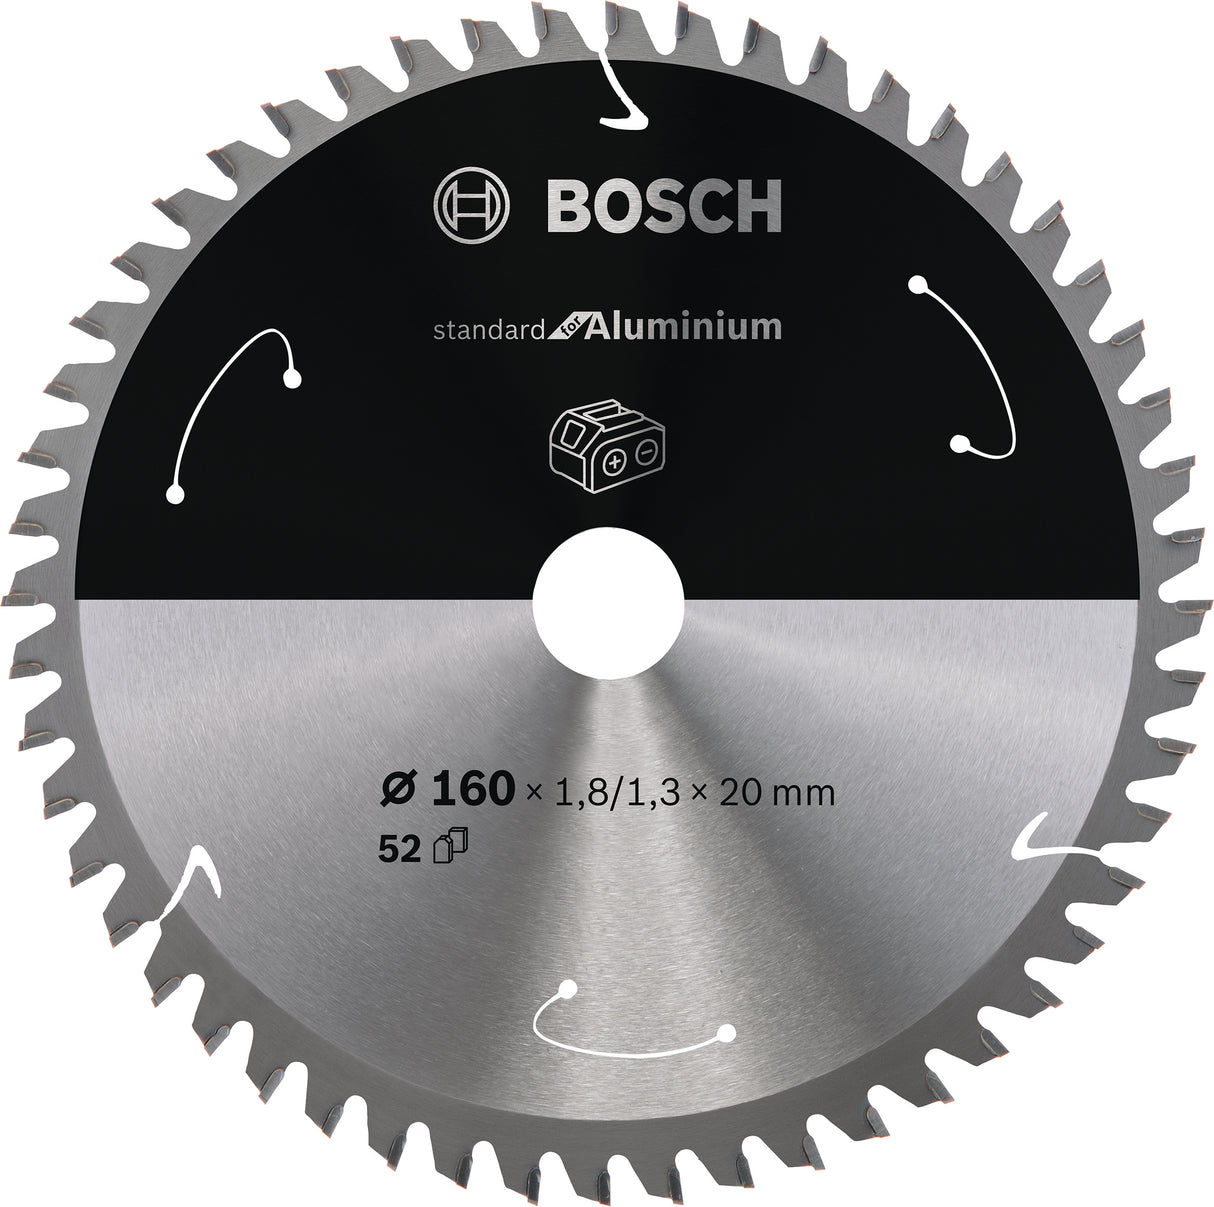 Bosch Professional Aluminium Circular Saw Blade for Cordless Saws - 160x1.8/1.3x20 T52 - Standard